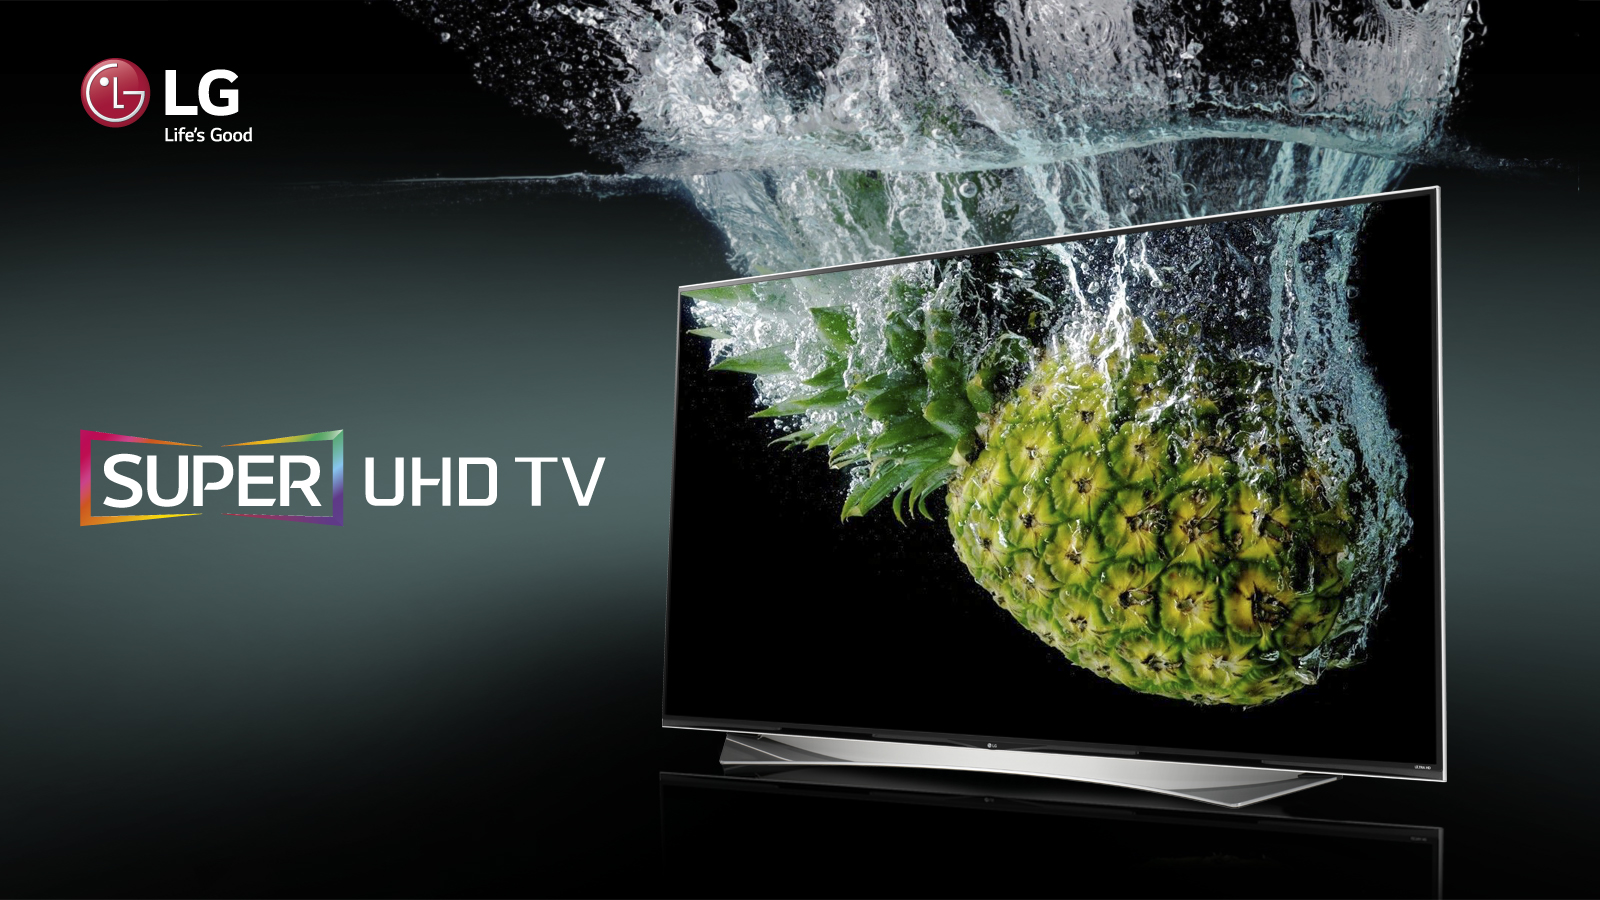 LG Super UHD TV 